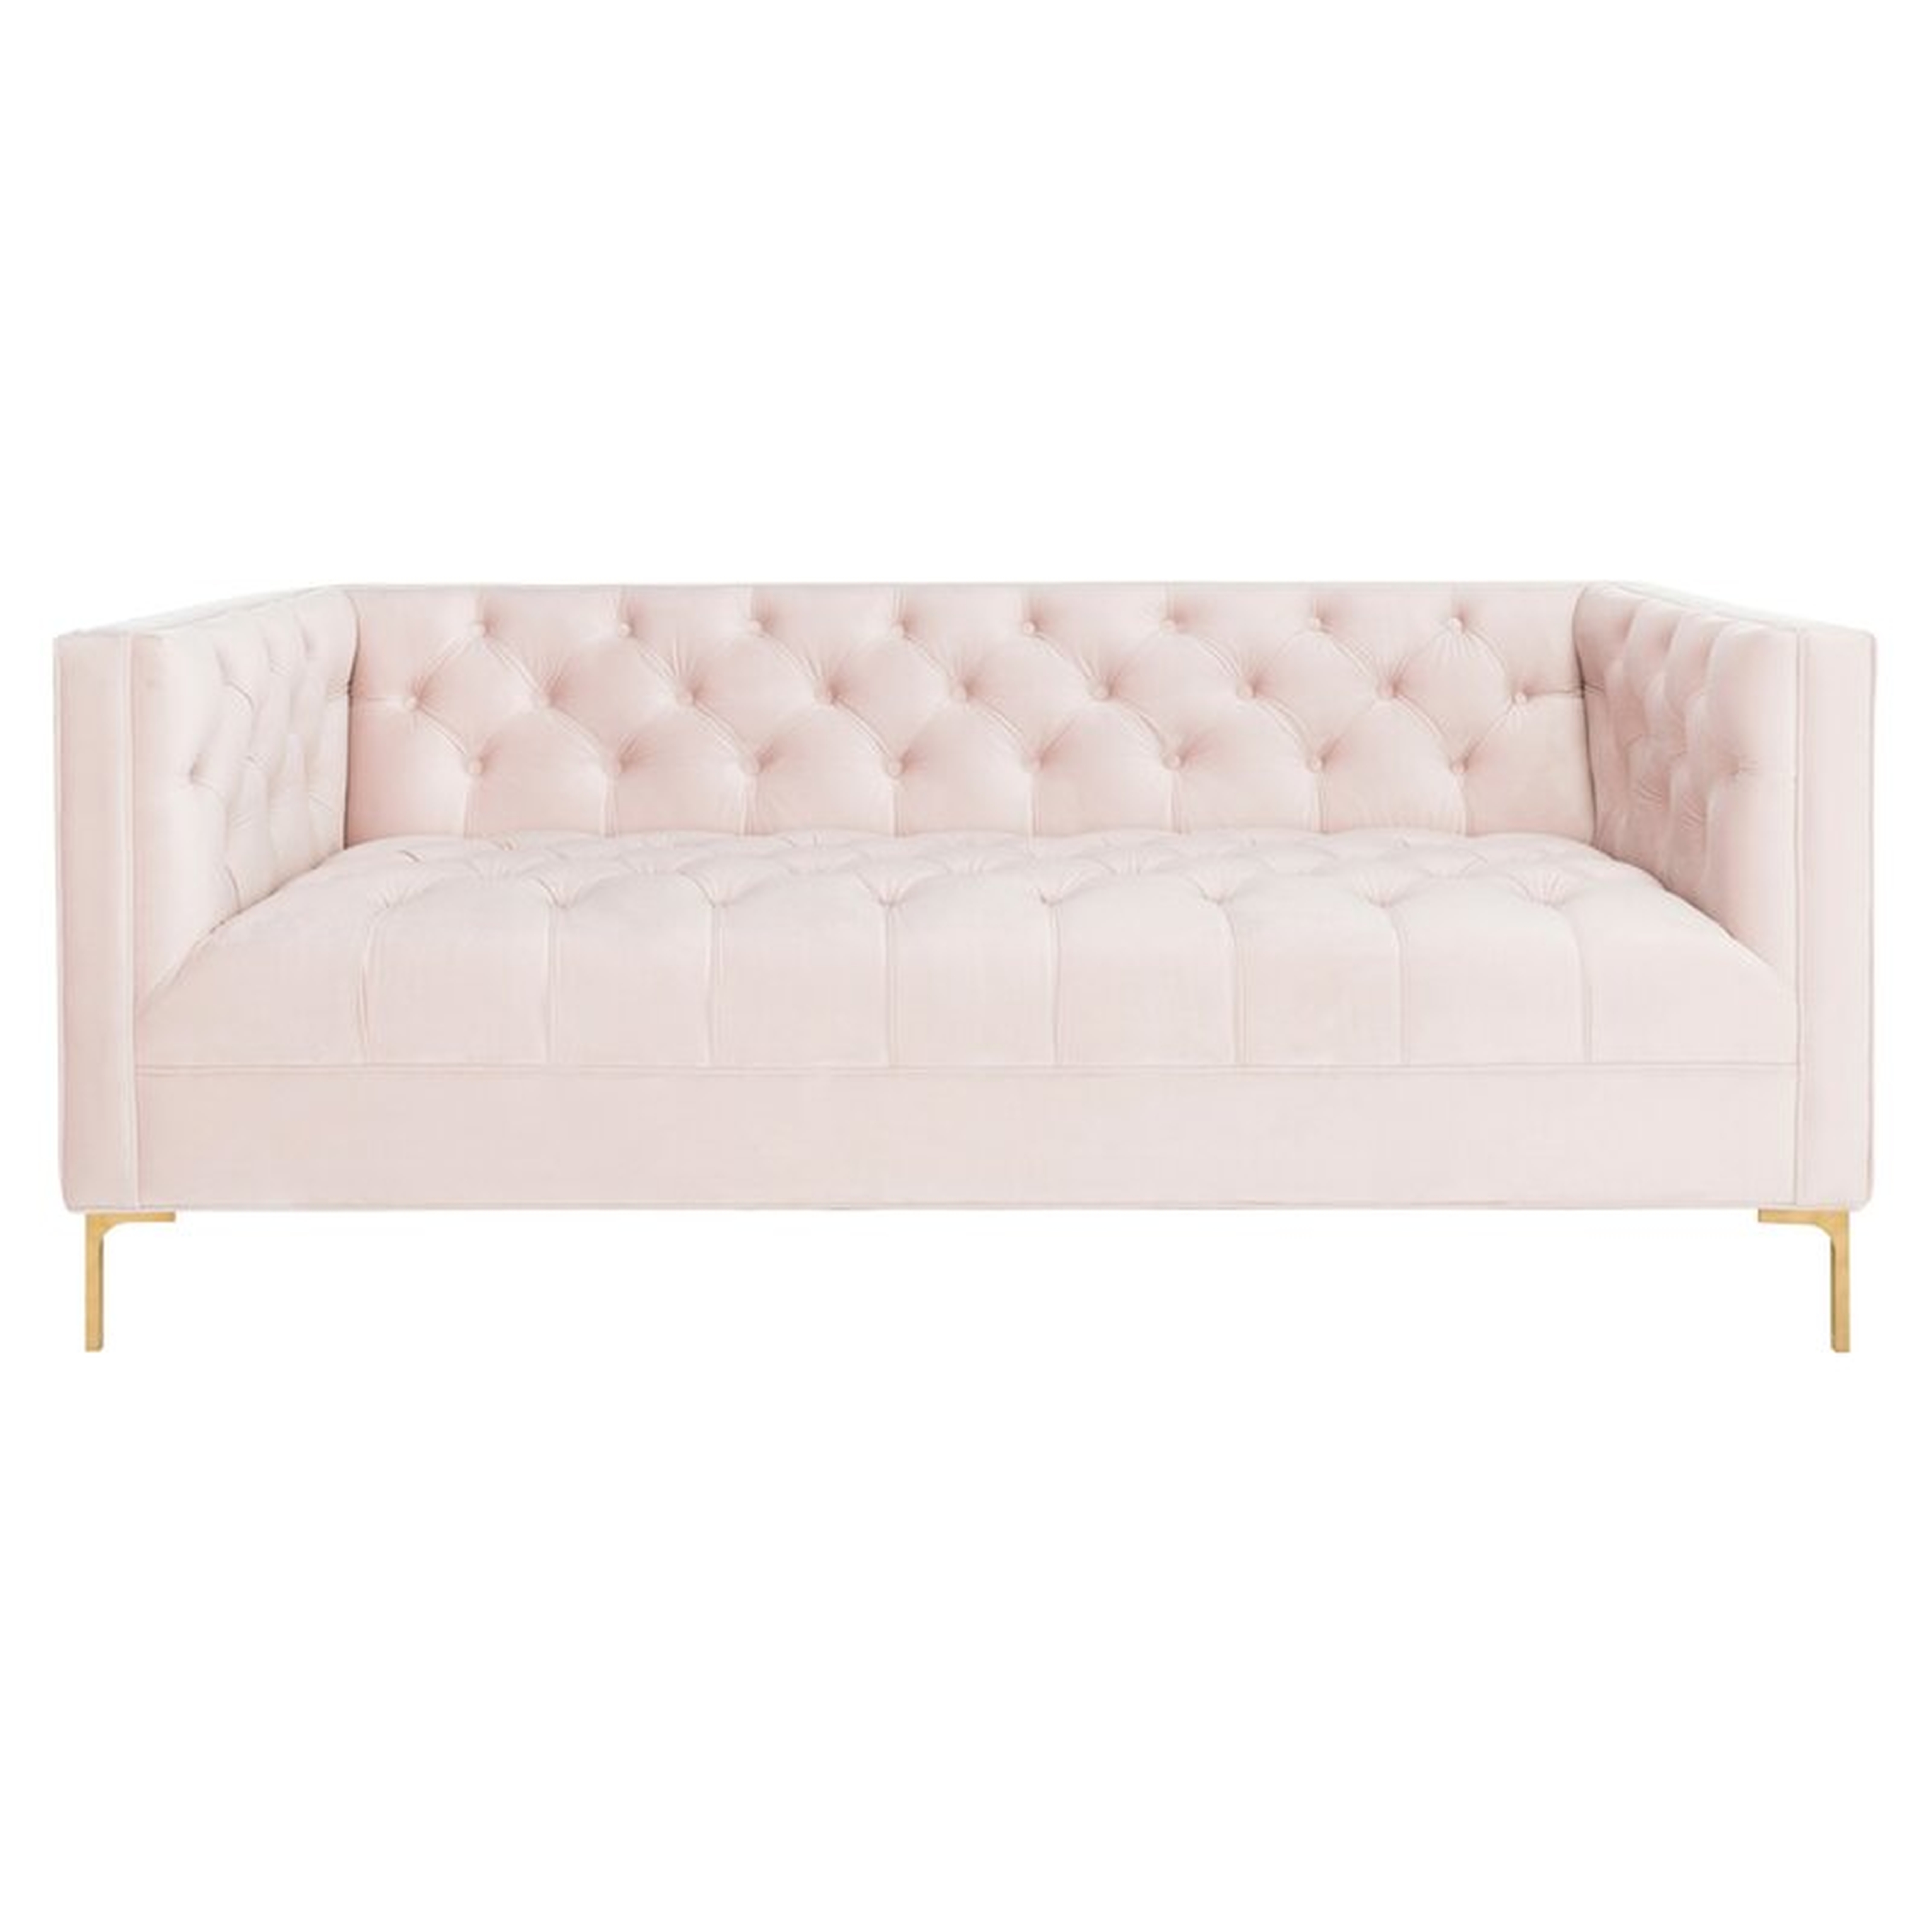 Safavieh Couture Vydia Sofa Upholstery: Blush Pink - Perigold